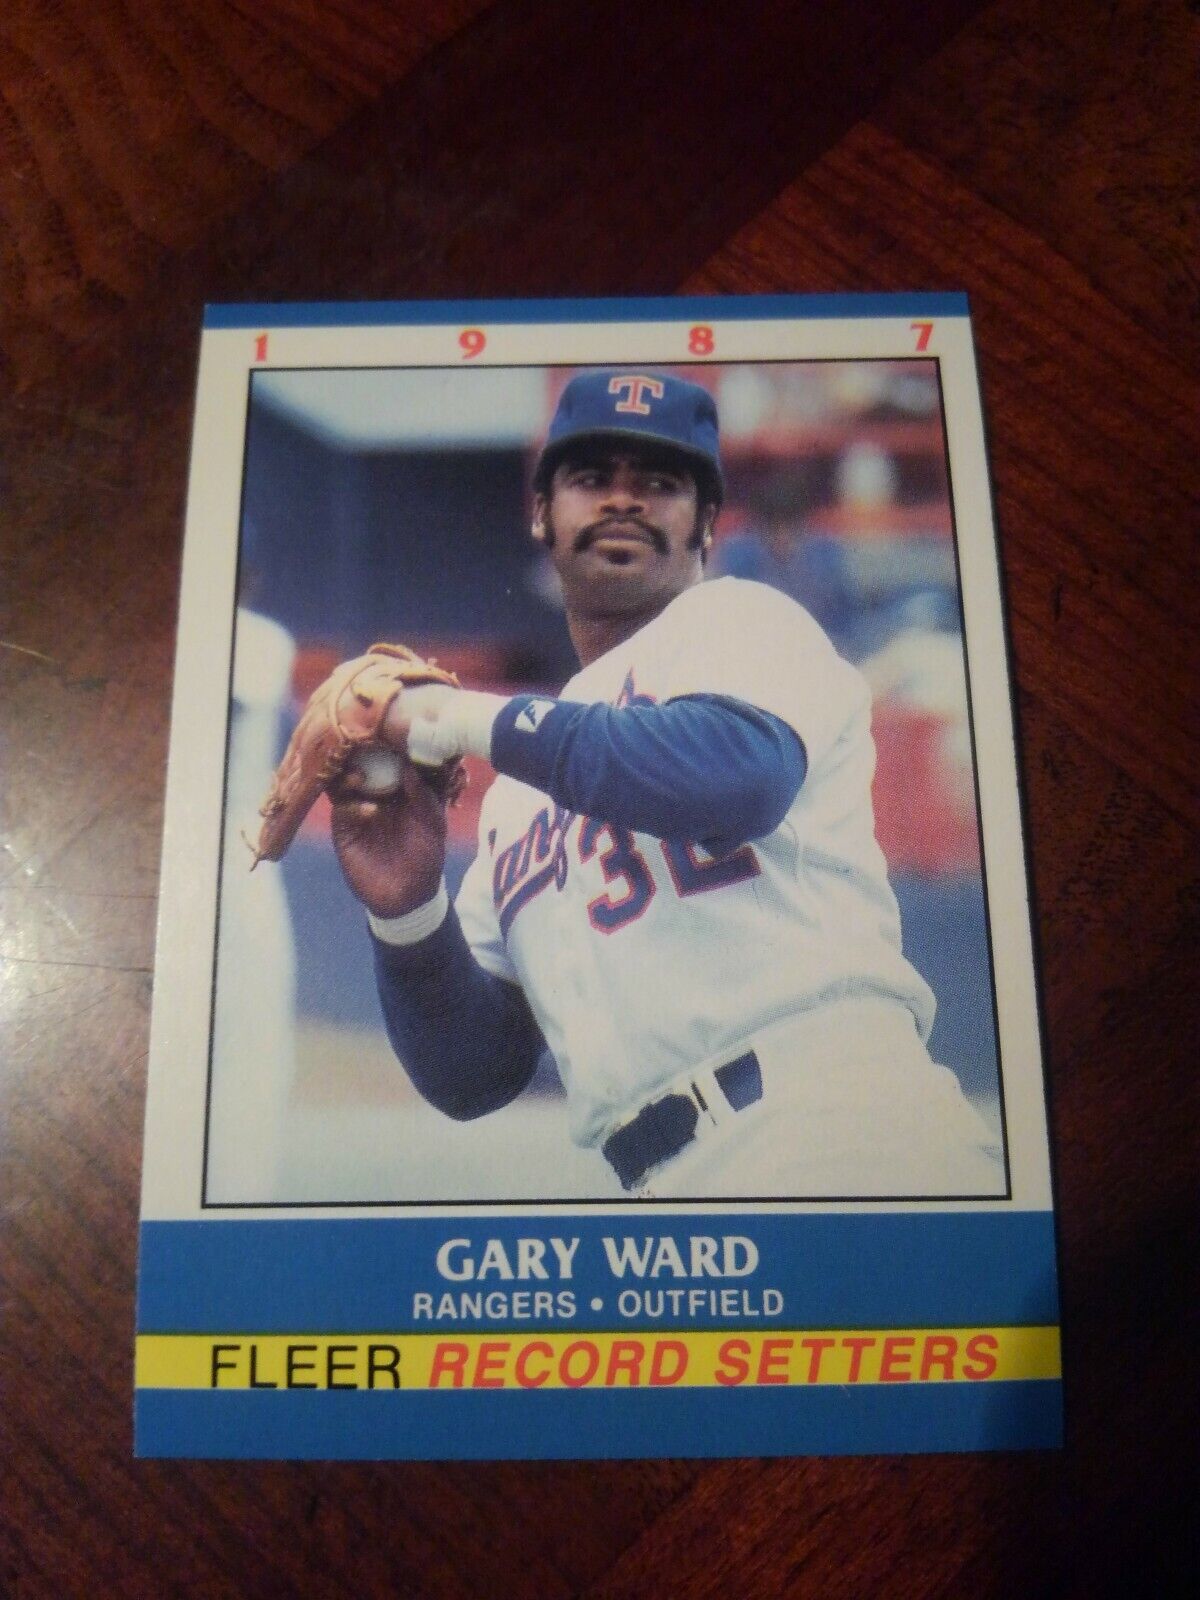 GARY WARD 1987 FLEER RECORD SETTERS #40 OF 44 